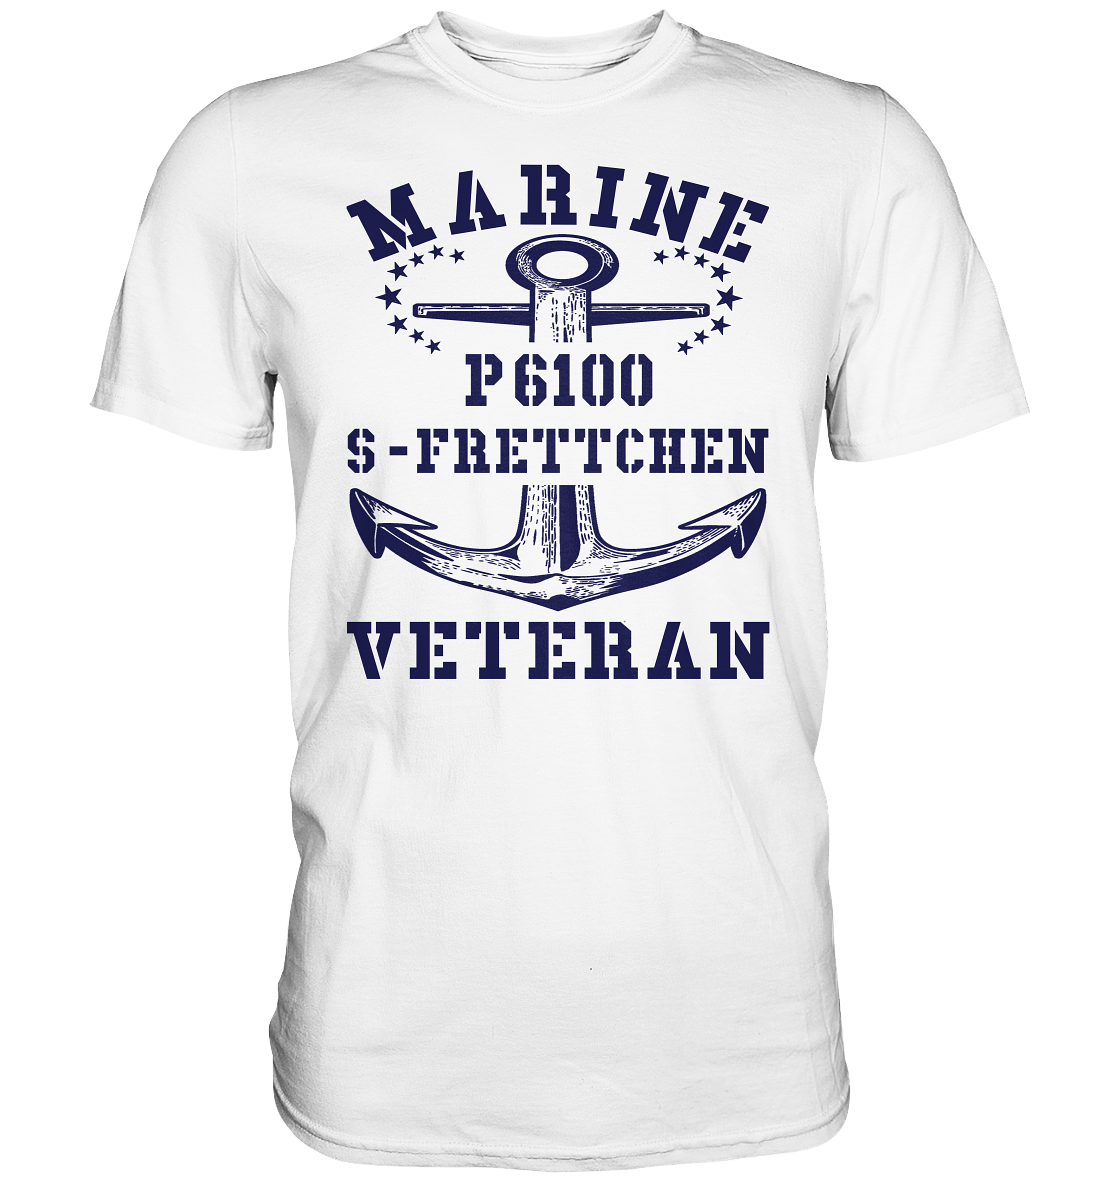 P6100 S-FRETTCHEN Marine Veteran - Premium Shirt